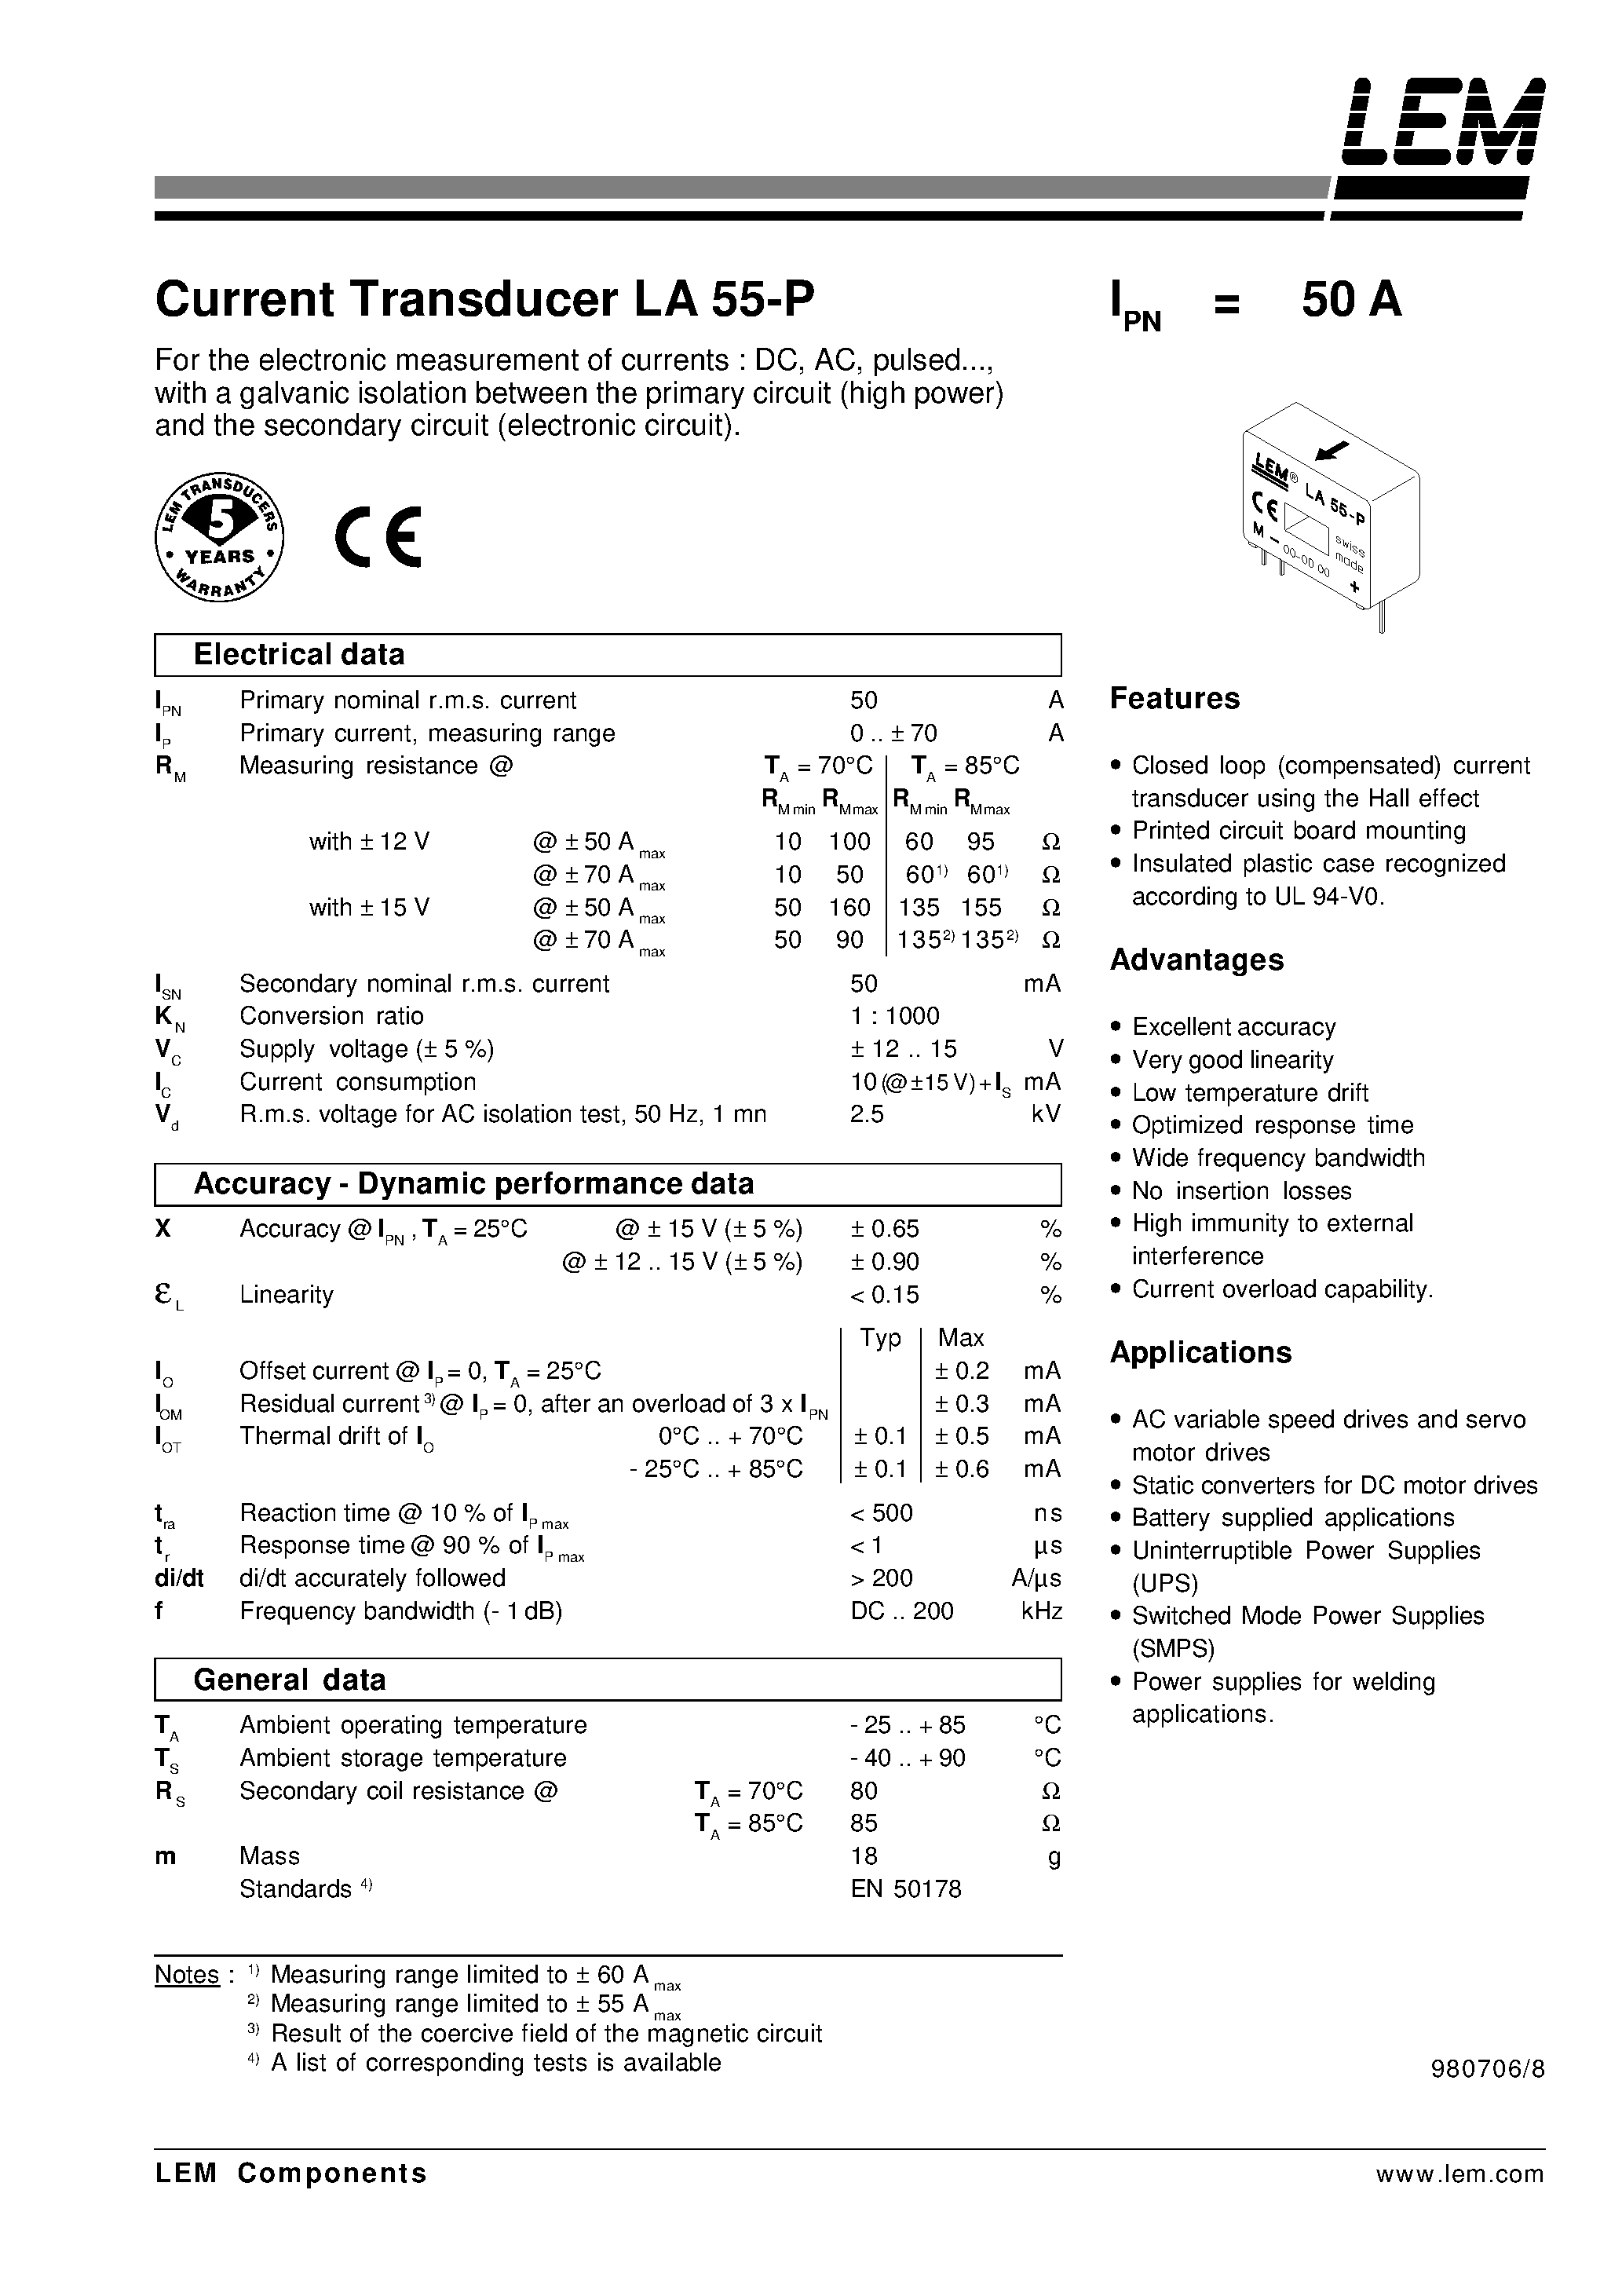 Datasheet LA55P - Current Transducer 50a page 1